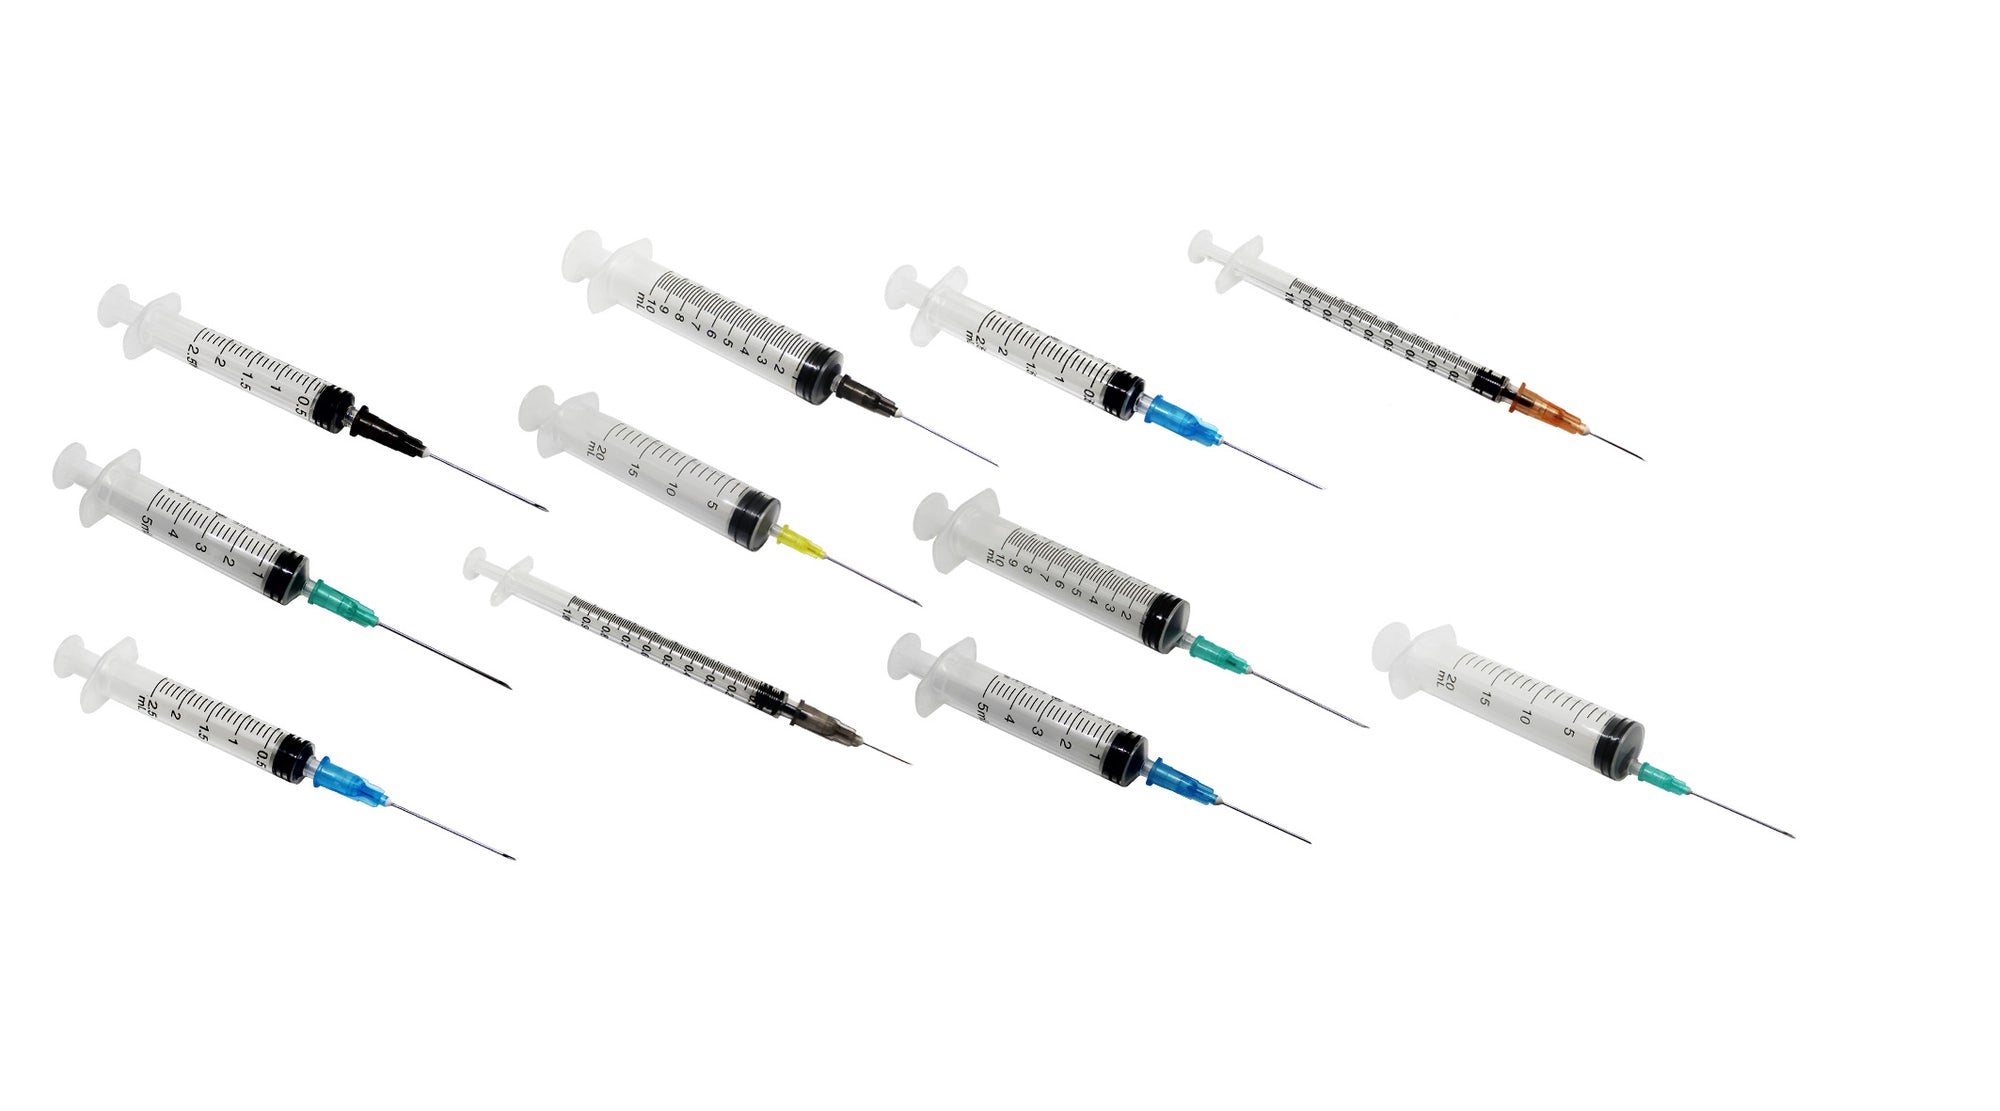 sterile syringe and needle for injection 1ml 2.5ml 5ml 10ml 20ml 25g 26g 27g 21g 22g 23g